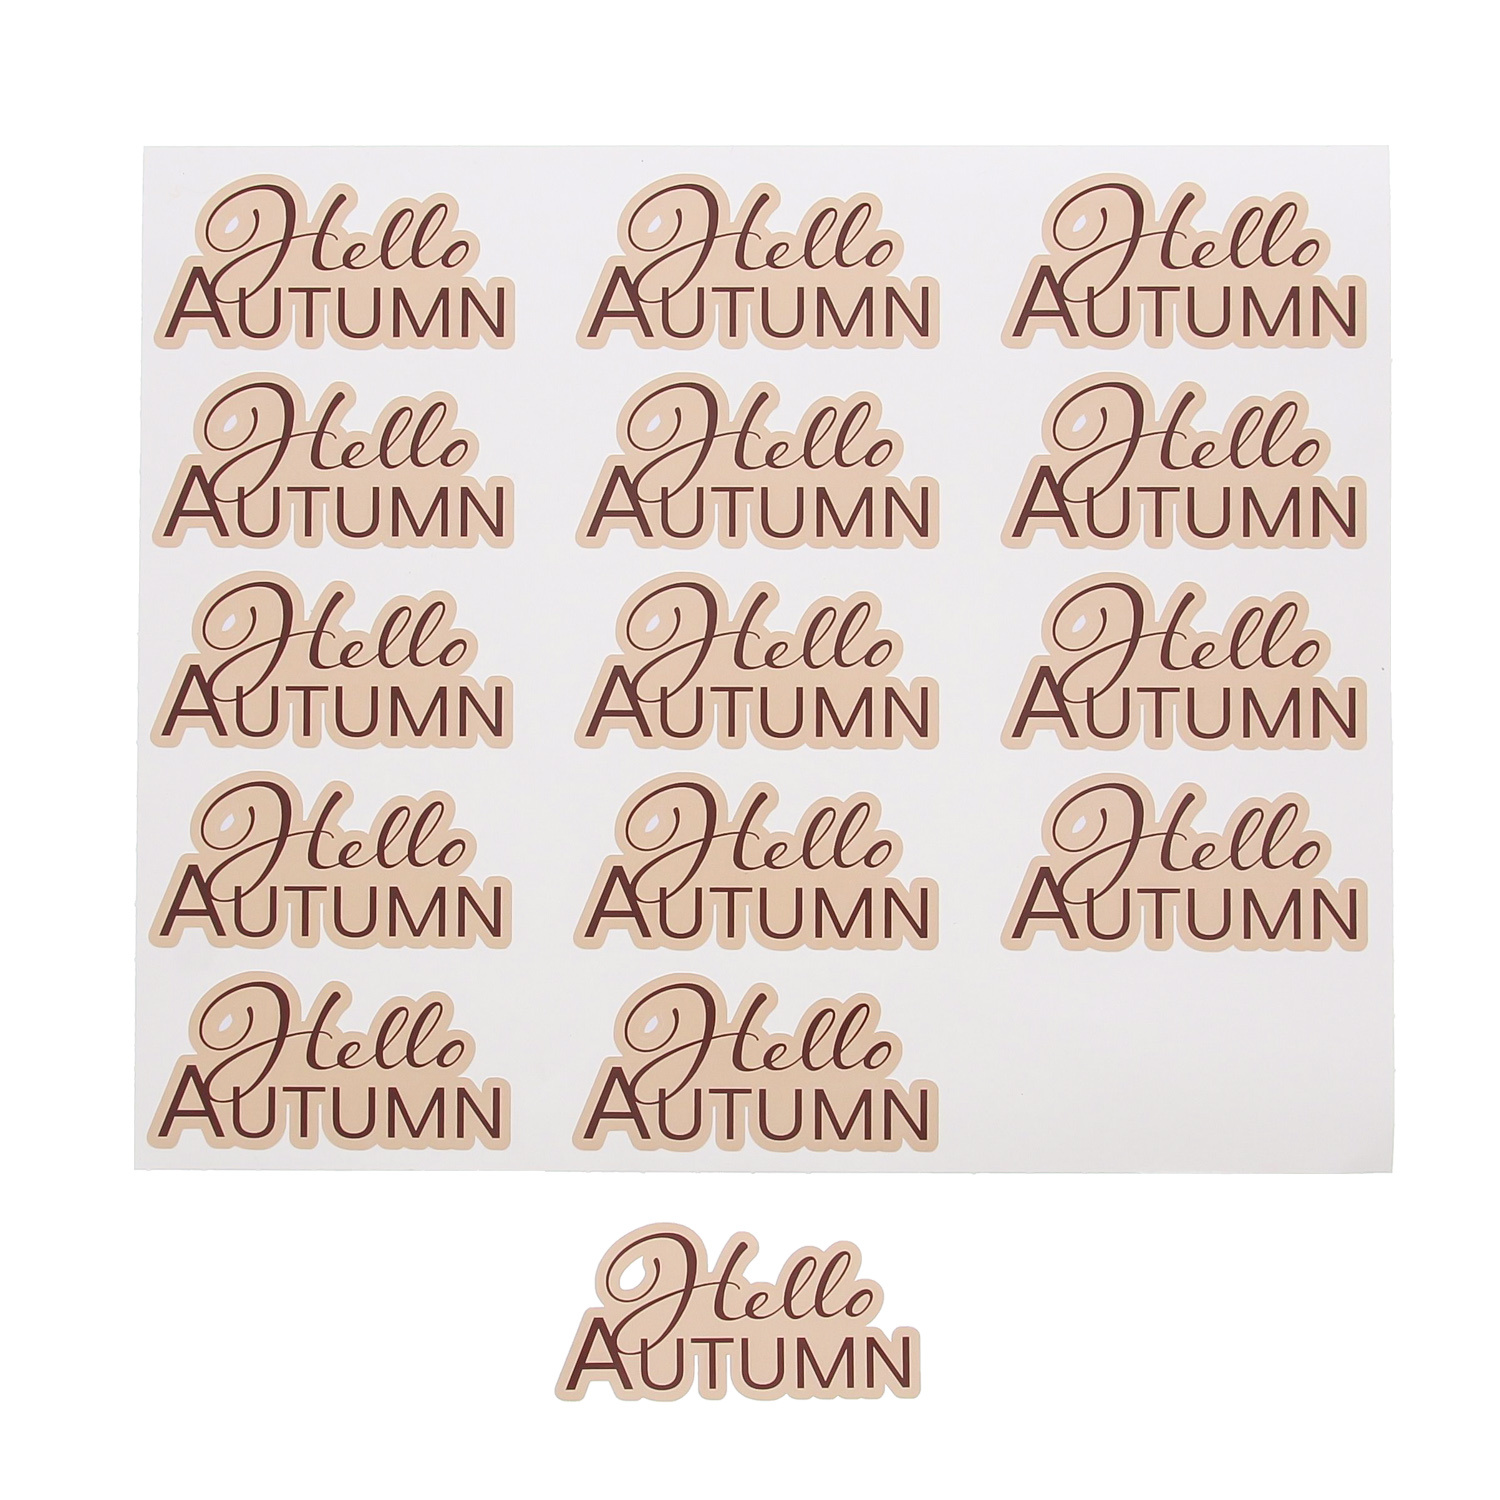 Sticker shiny "Musky Hello Autumn" text - 75 pieces